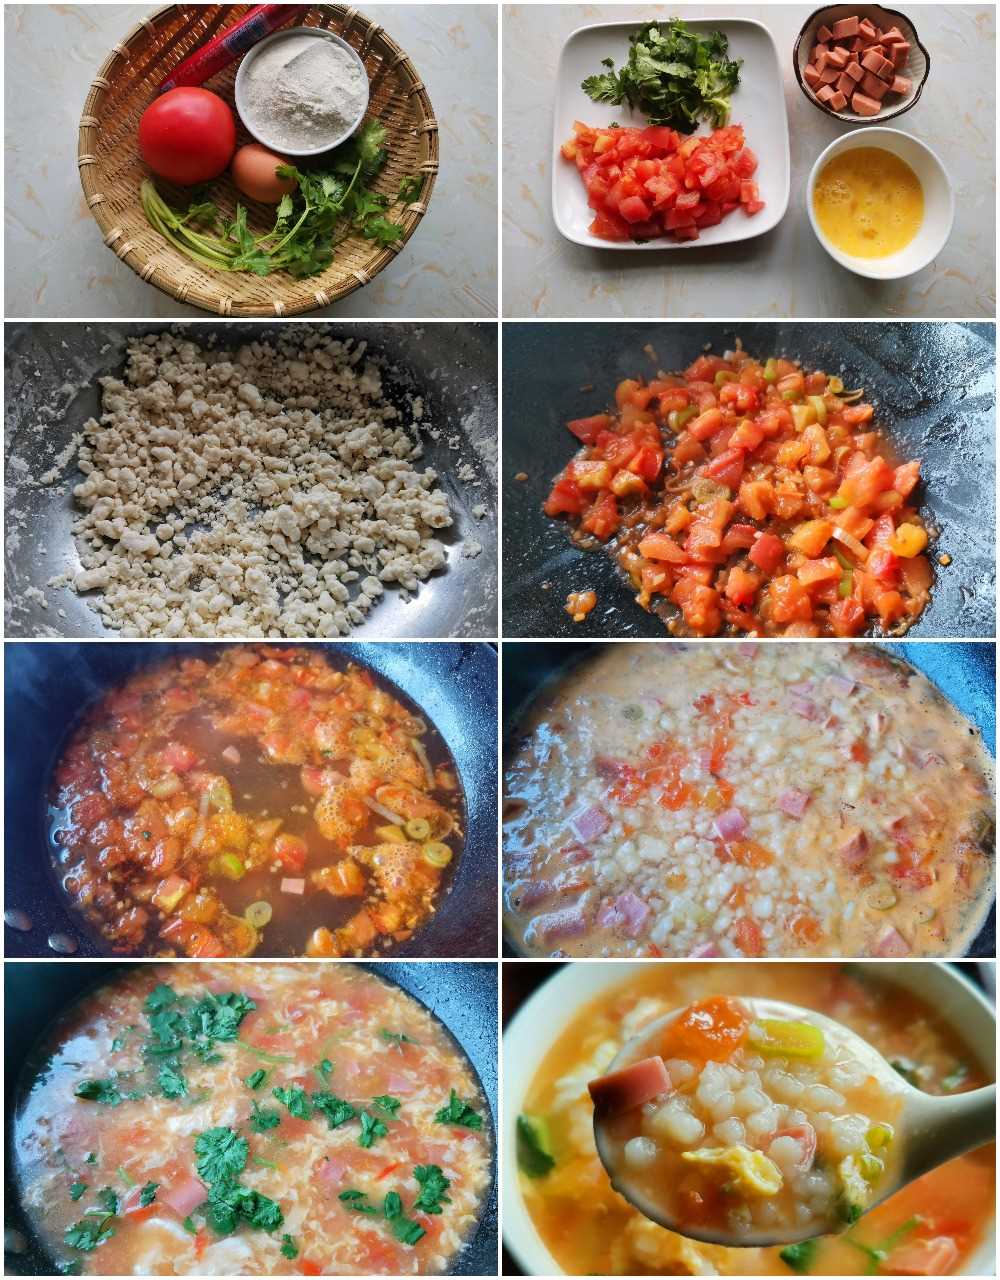 Tomato and egg flour soup 2021